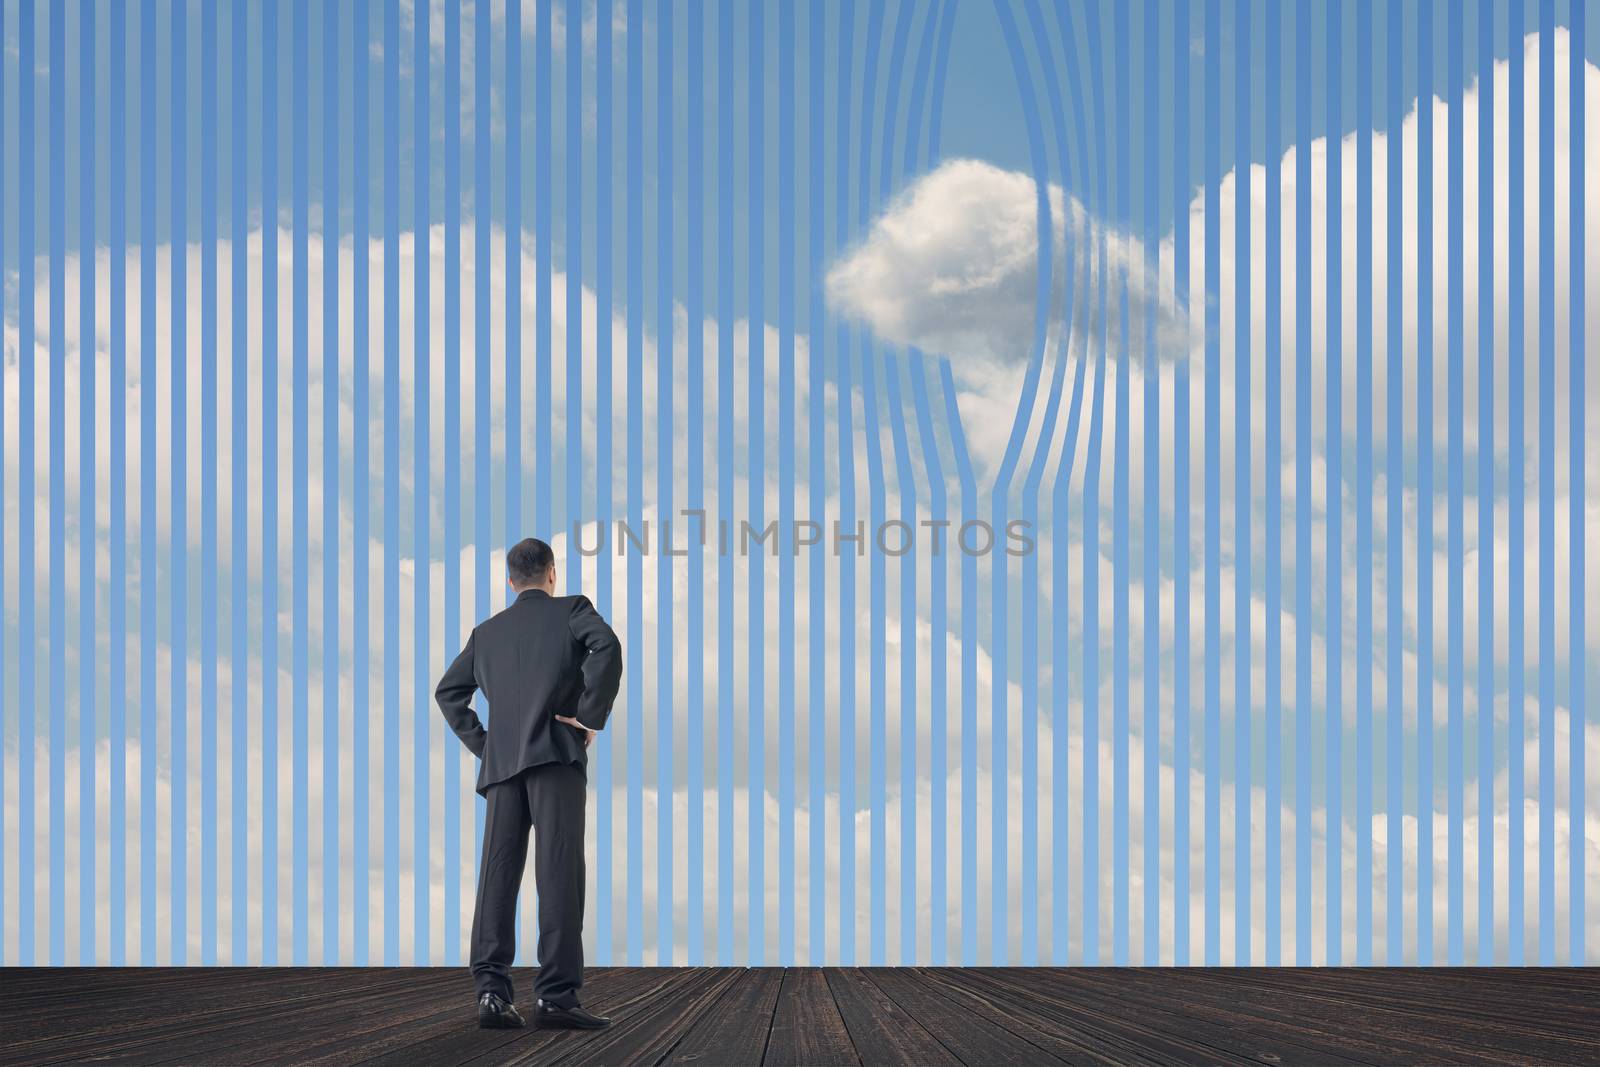 Concept of clouds by elwynn